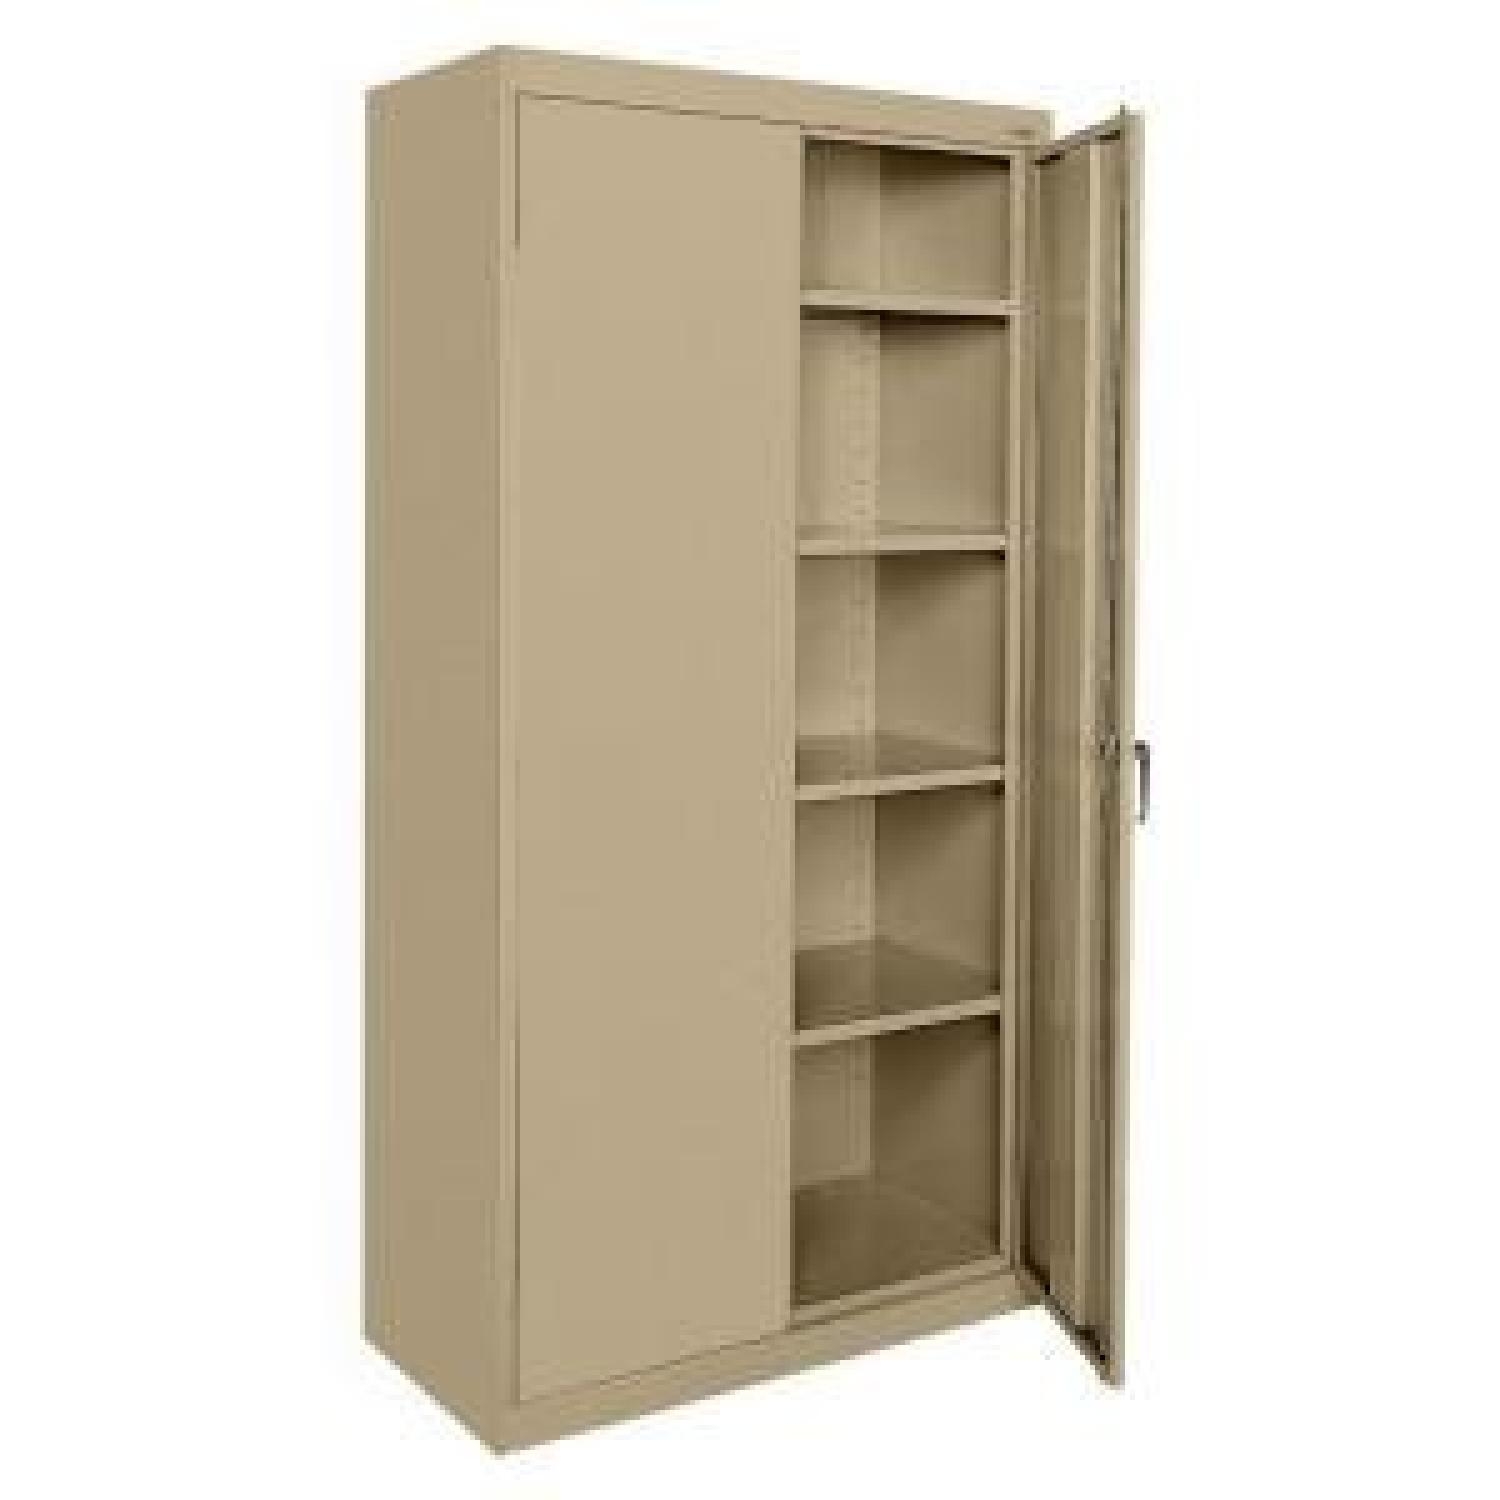 Storage Cabinets With Doors Visualhunt, Metal Storage Shelves With Doors